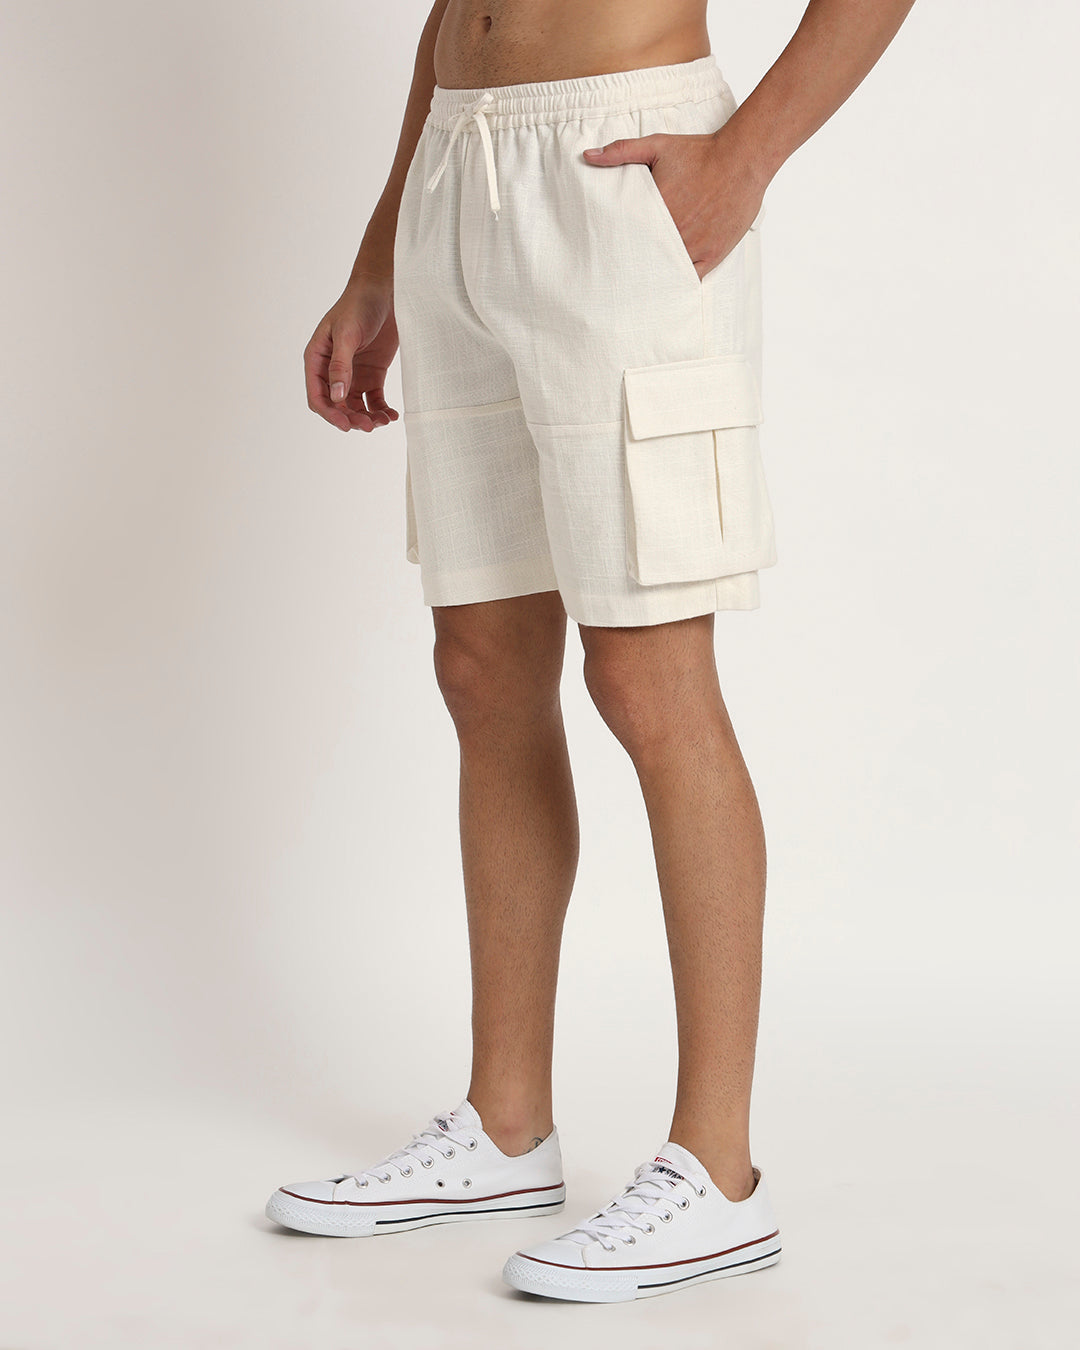 Combo: Classic Iced Grey Half Sleeves Men's Shirt & Cargo Shorts